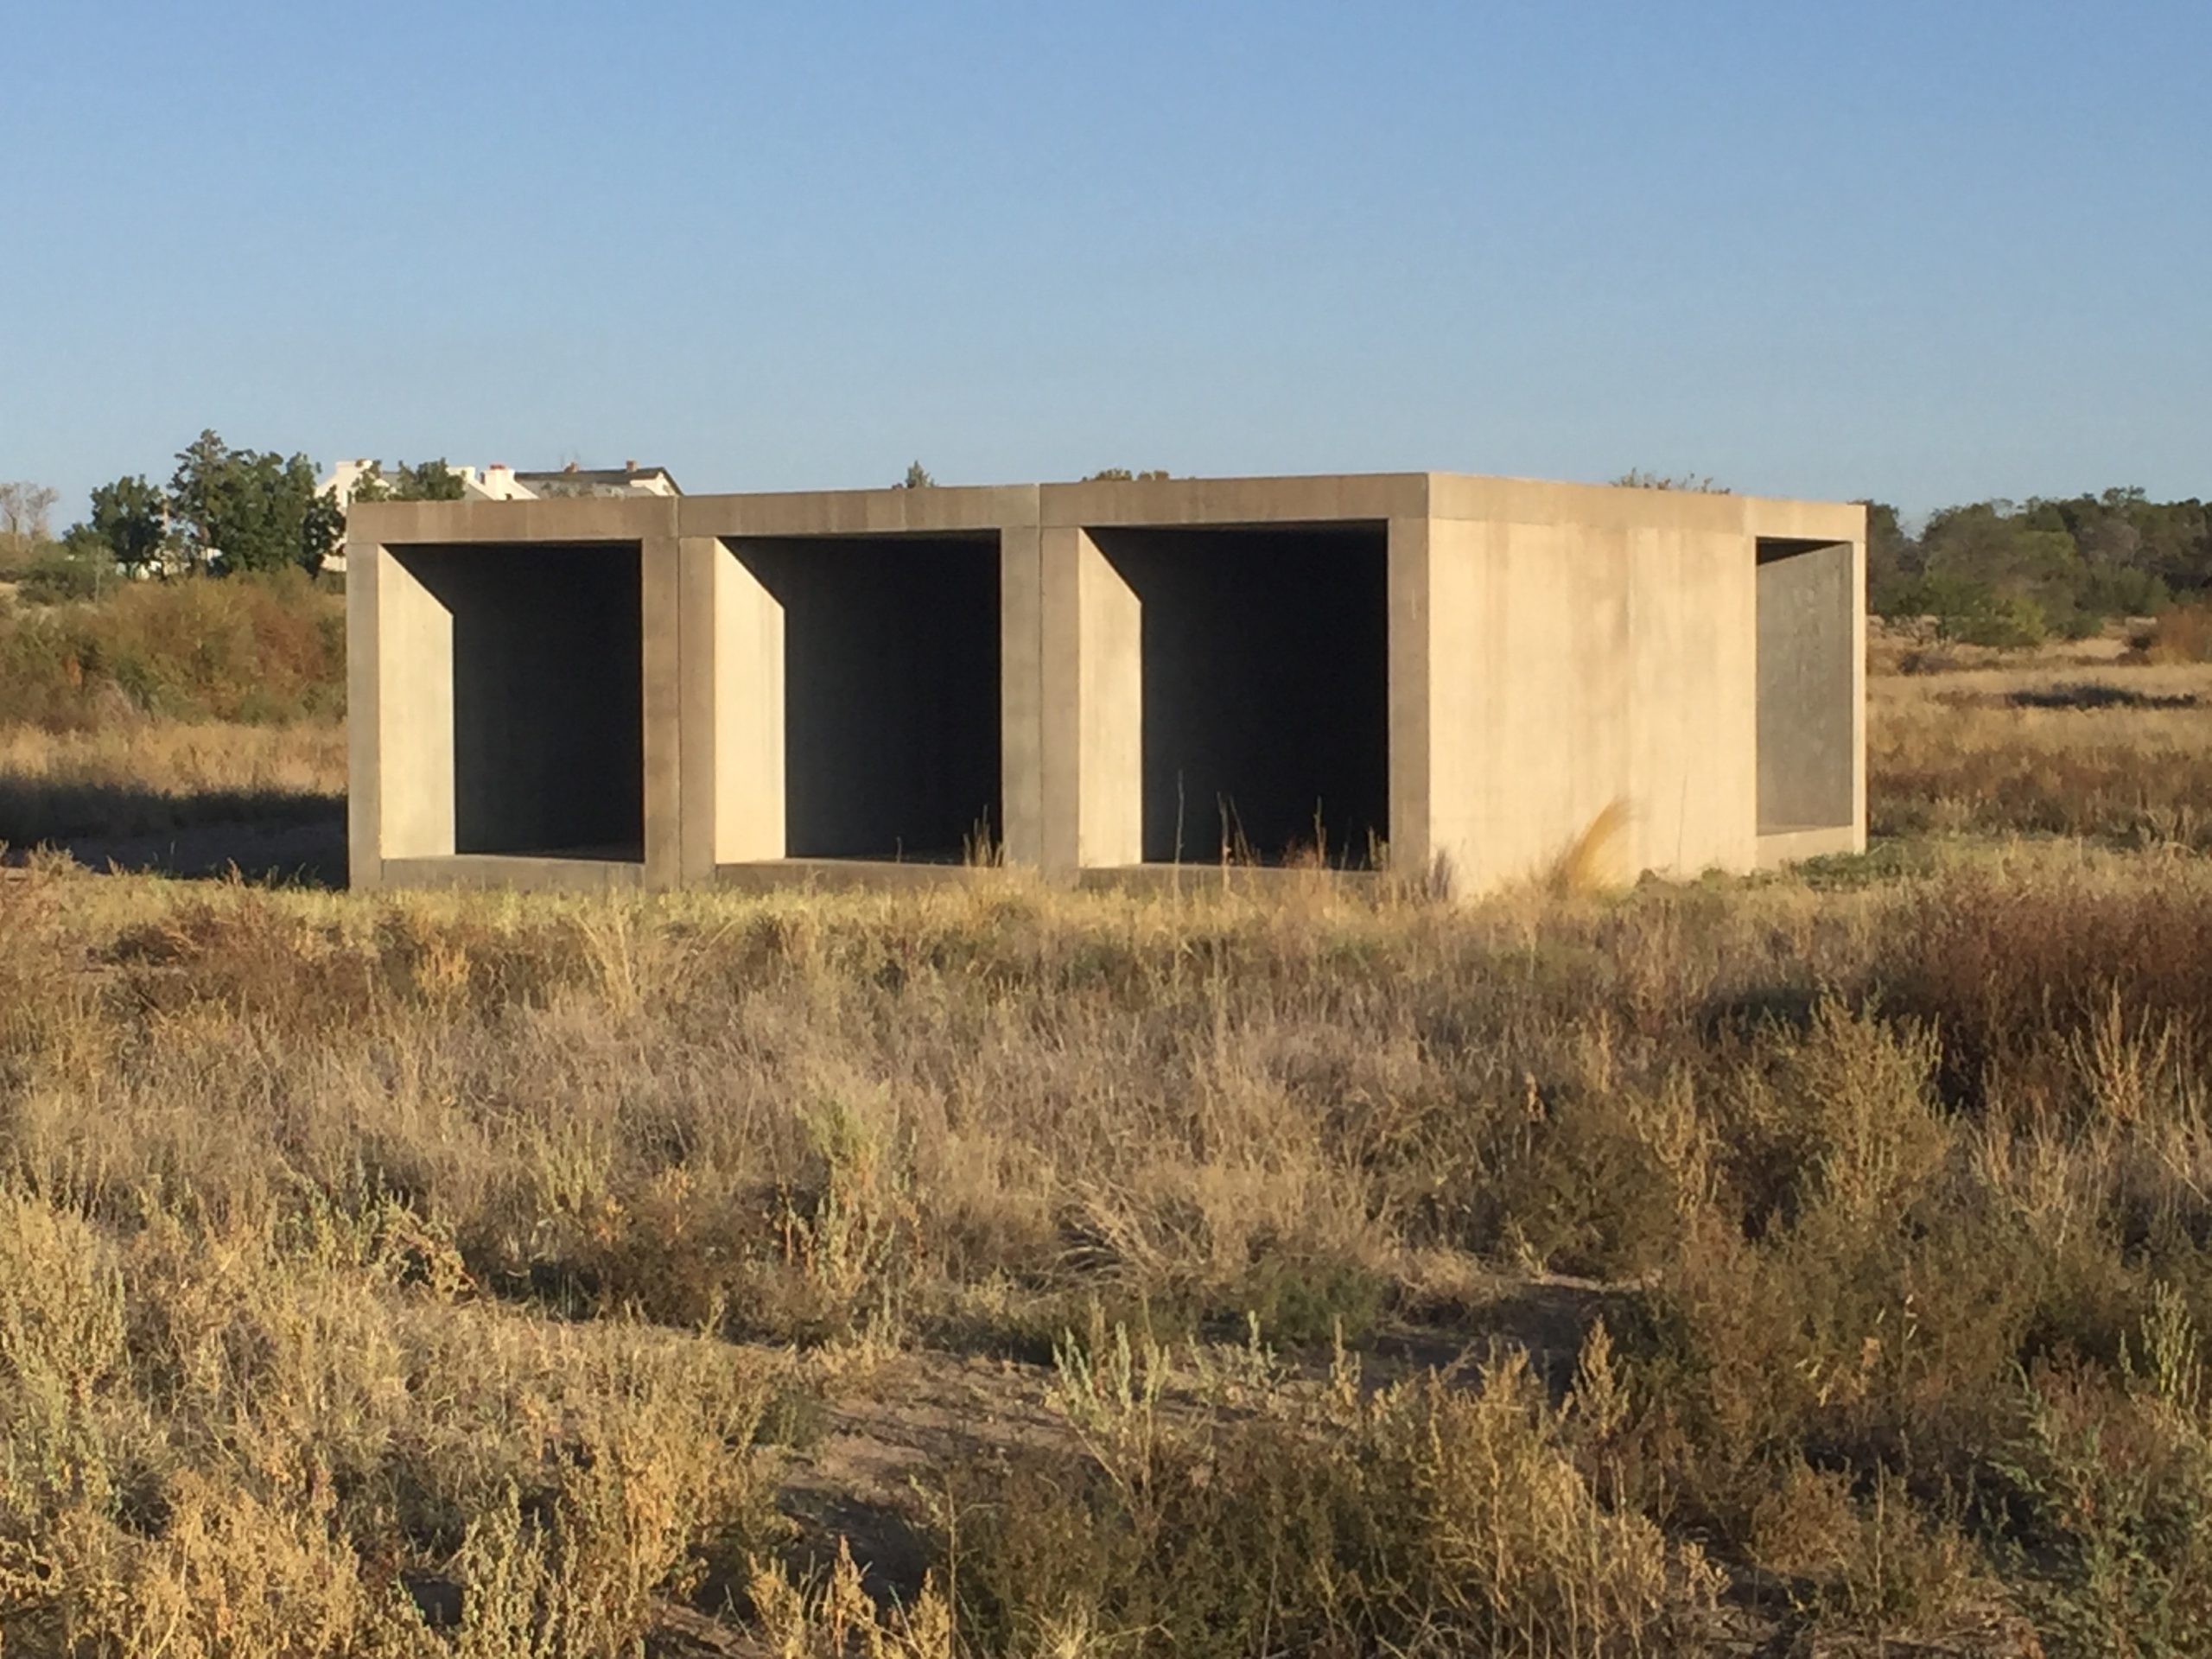 A three-bay concrete structure in a grassy desert setting